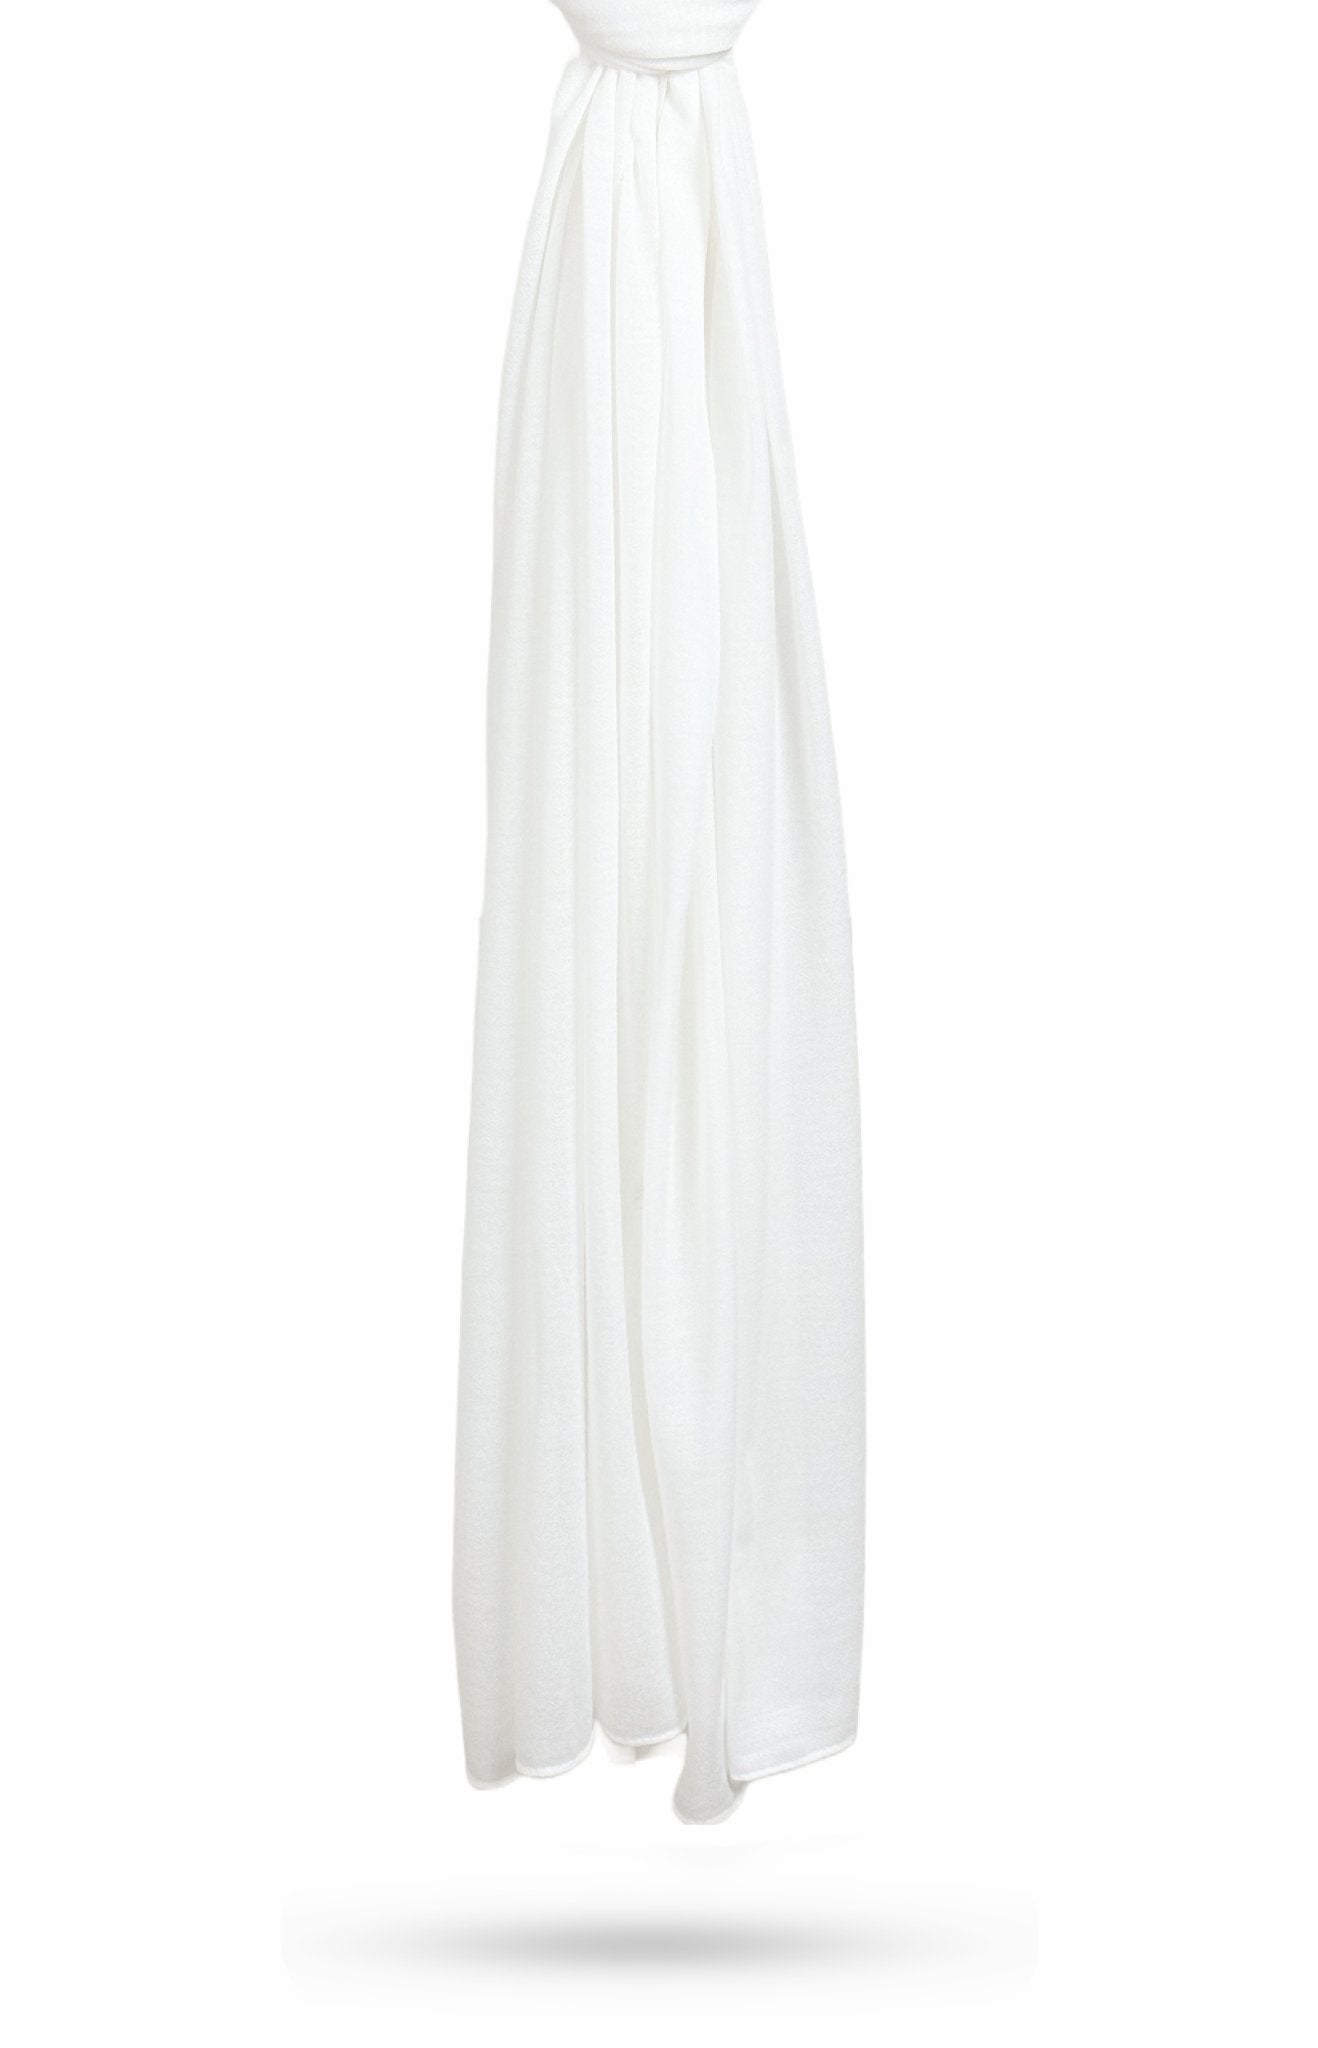 Offwhite Turkish Cotton Hijab - Modest Essence